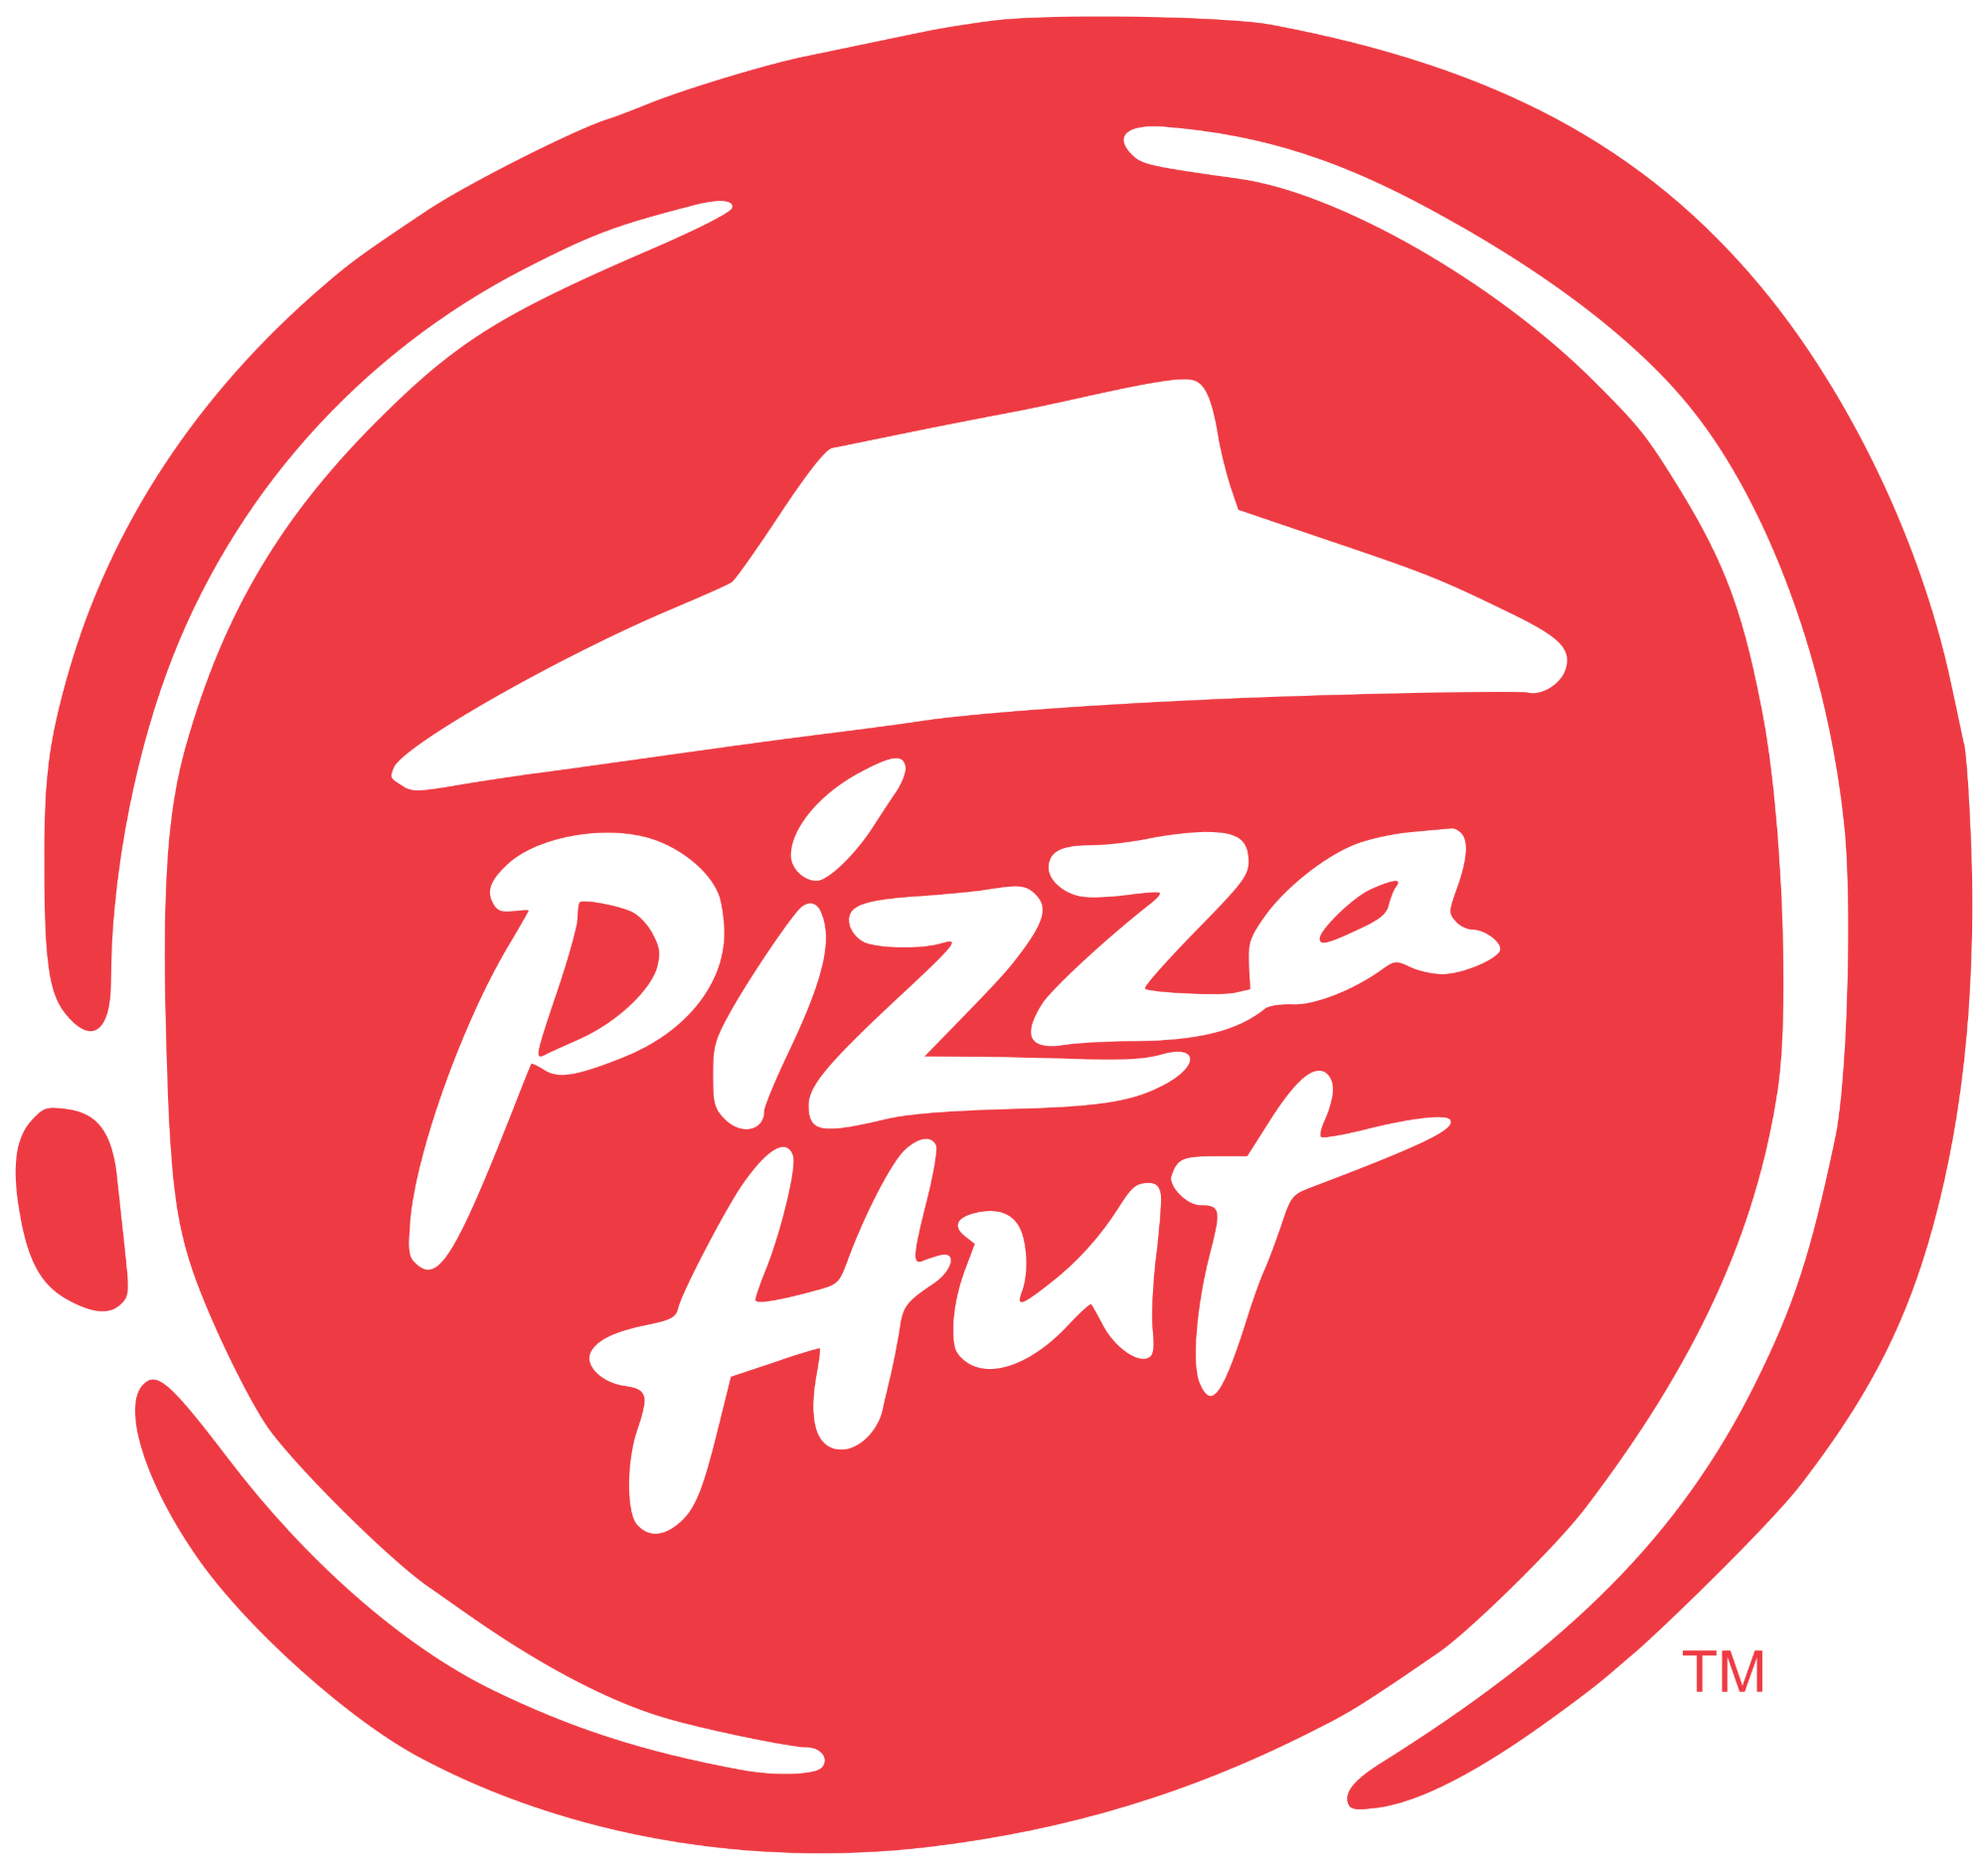 Pizza Hut Logo Png Download -